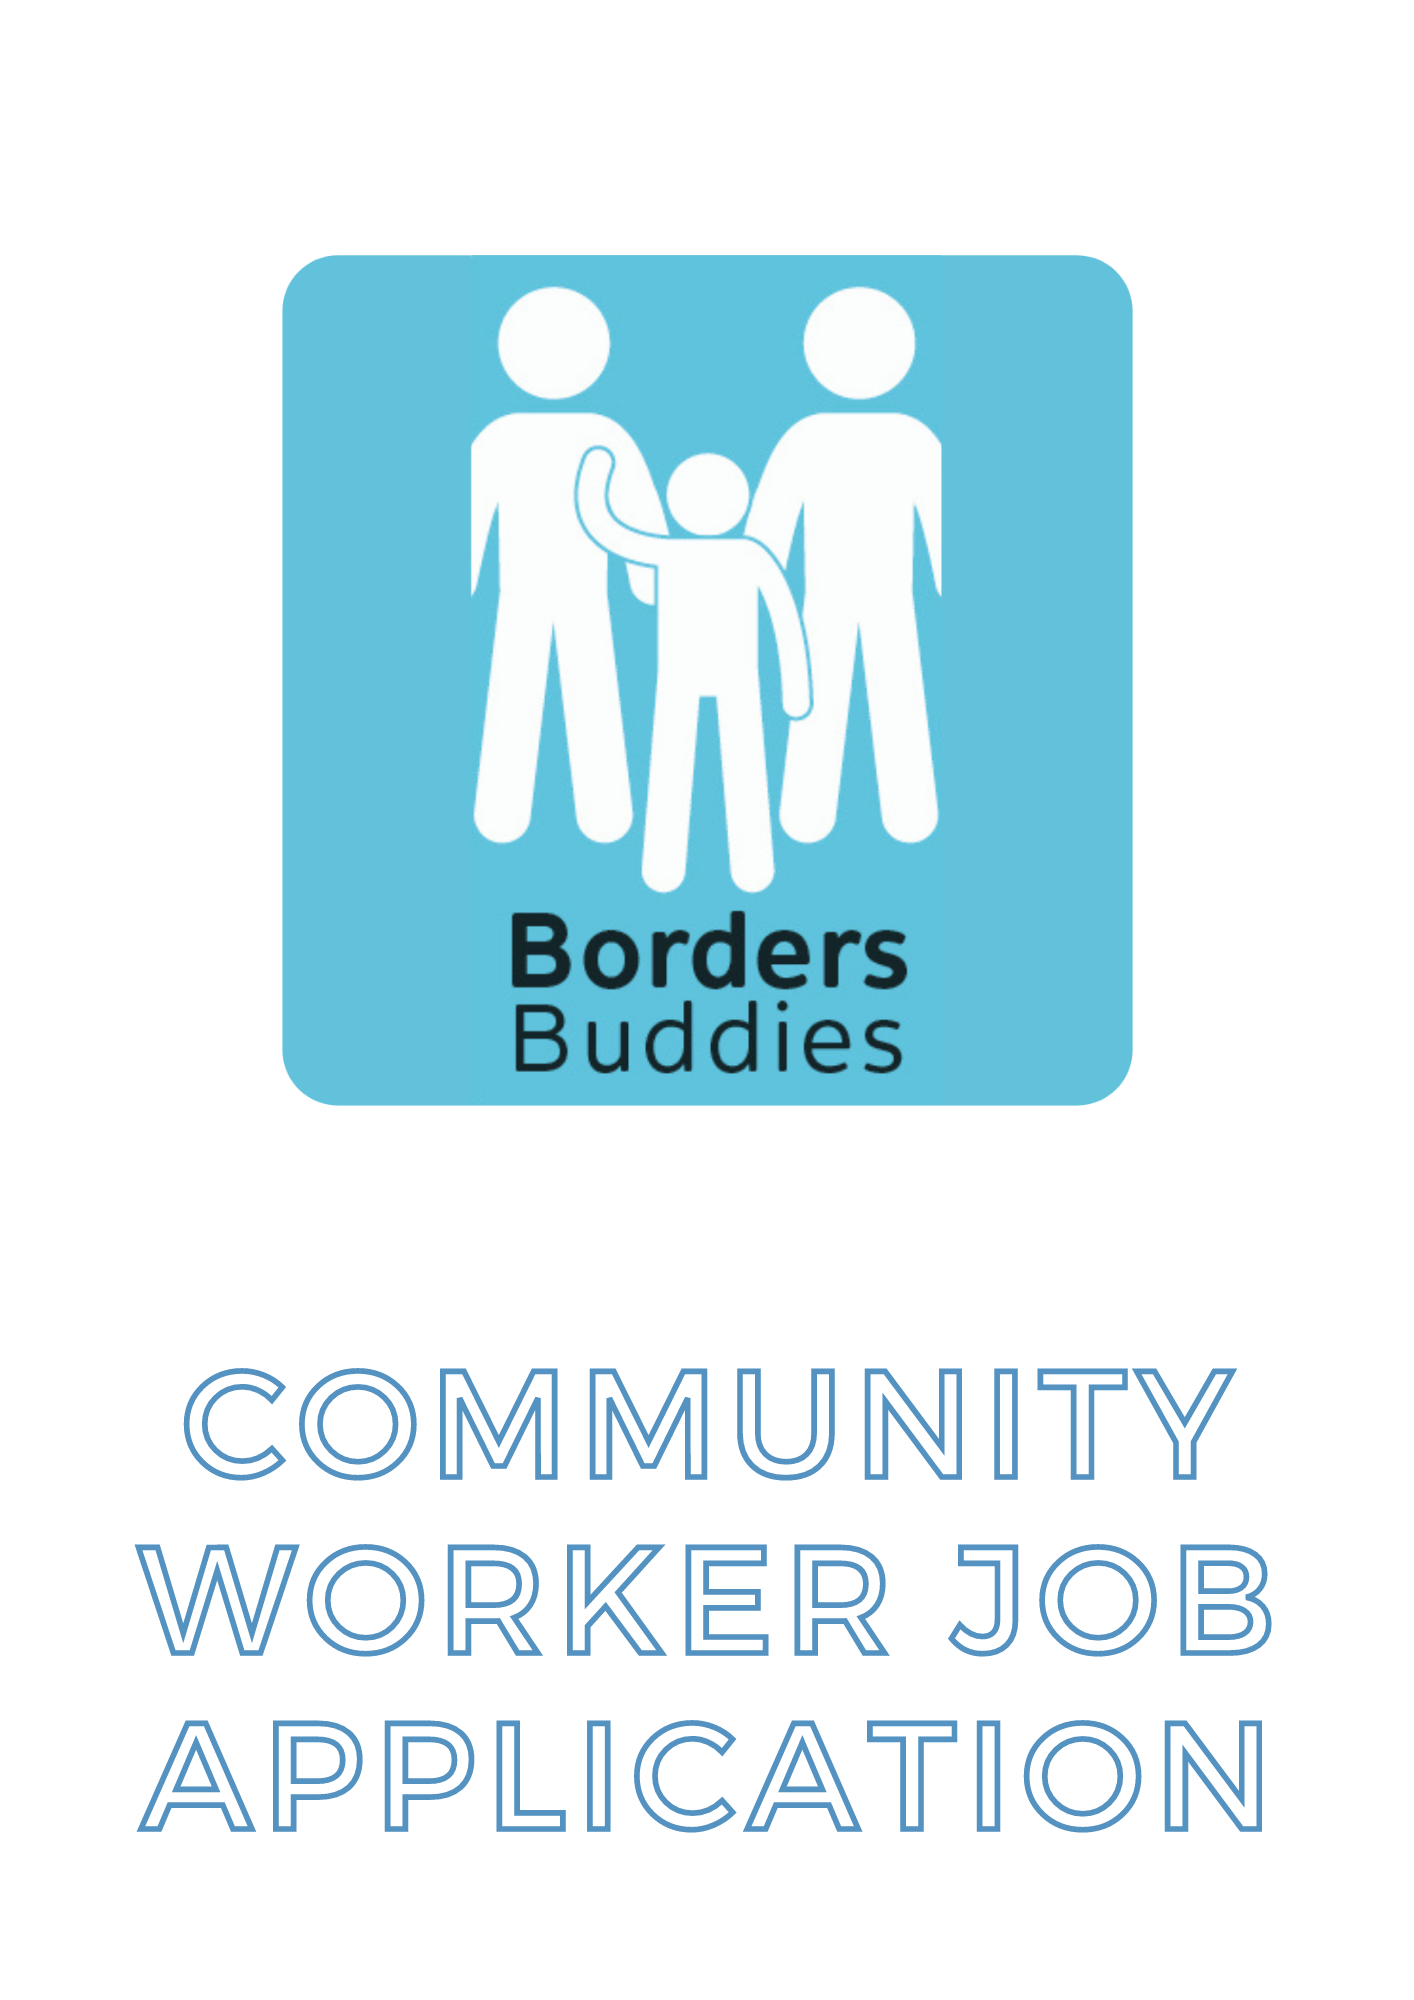 Community worker job application